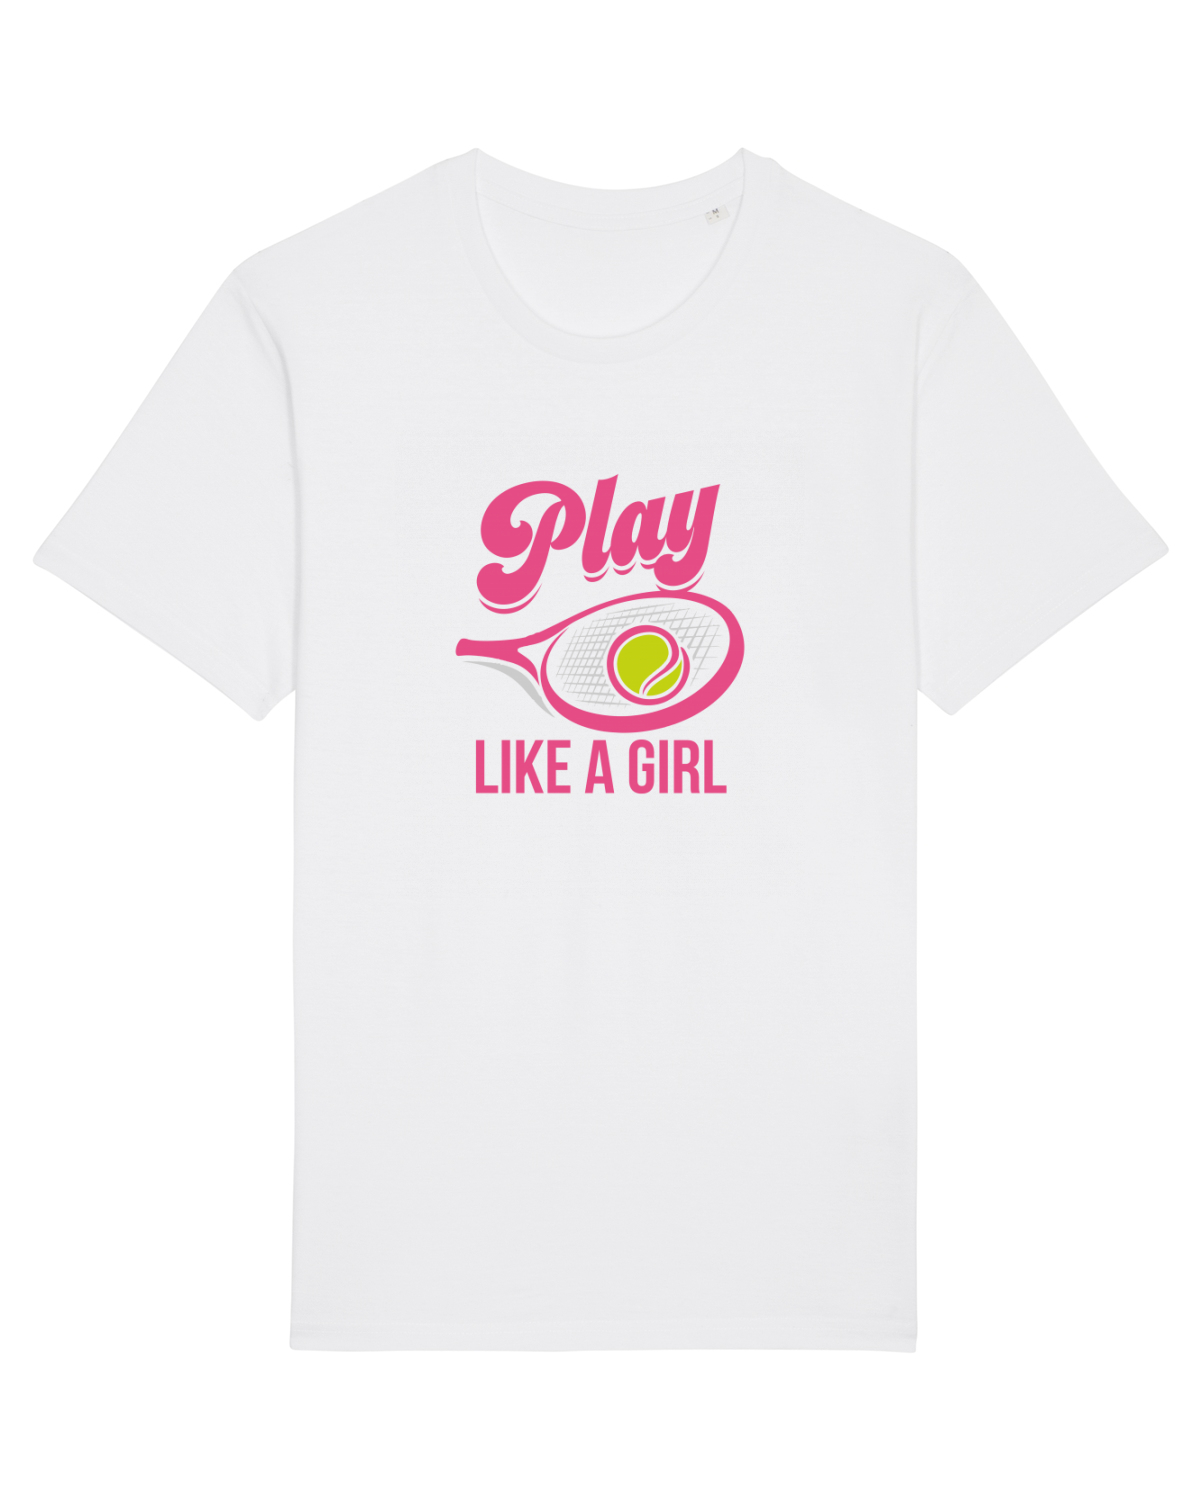 Play like a girl.